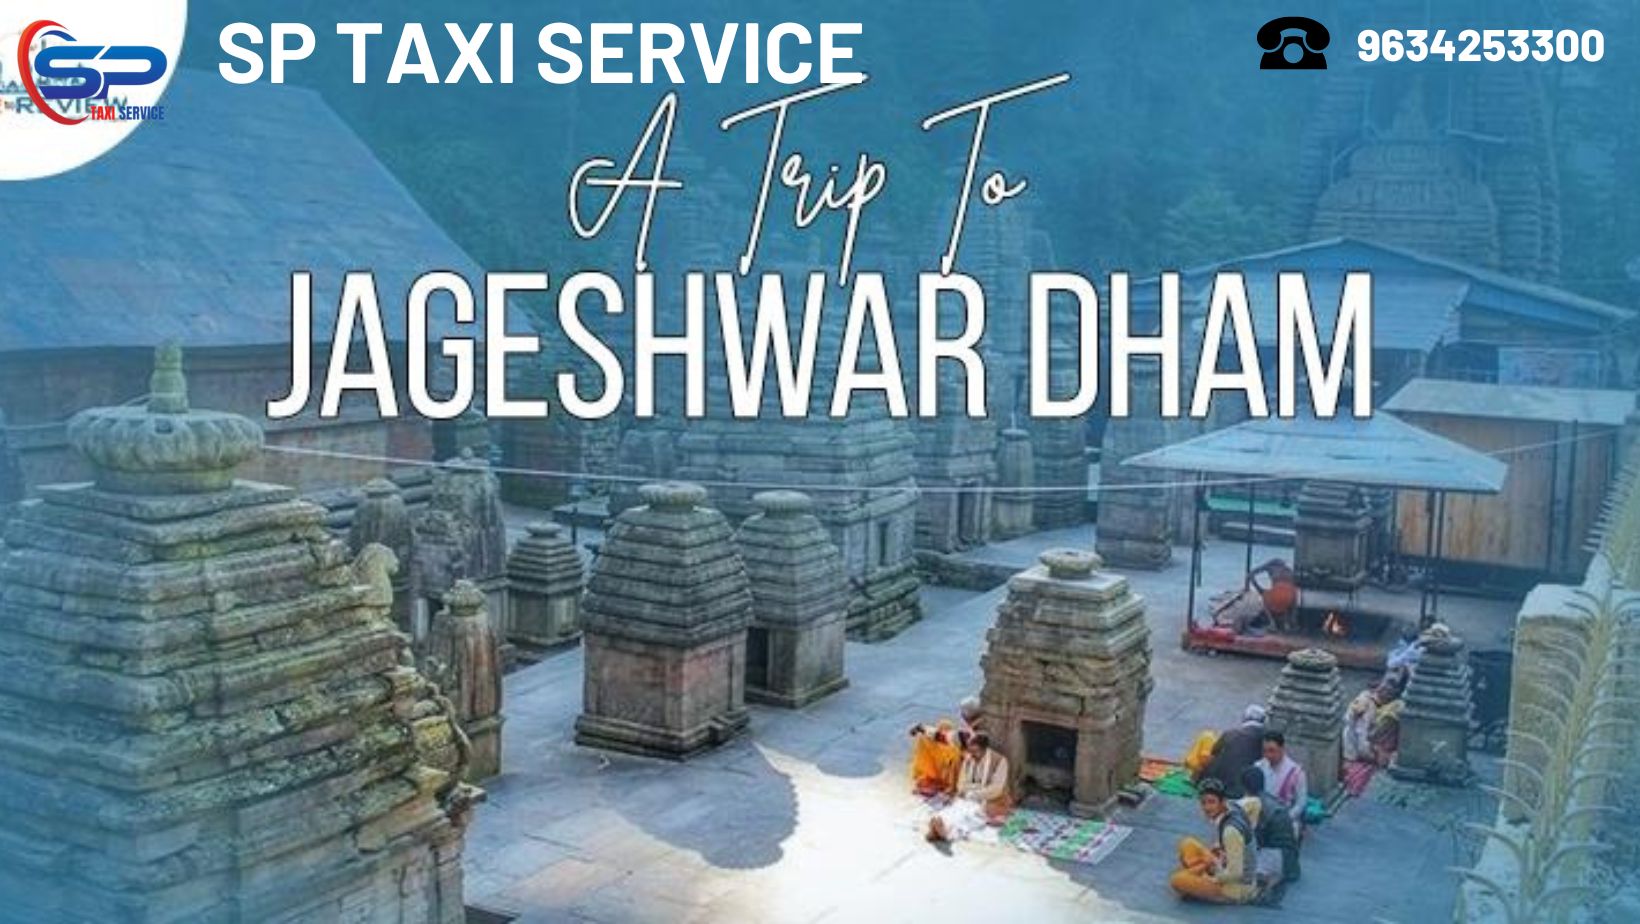 Jageshwar dham Taxi service